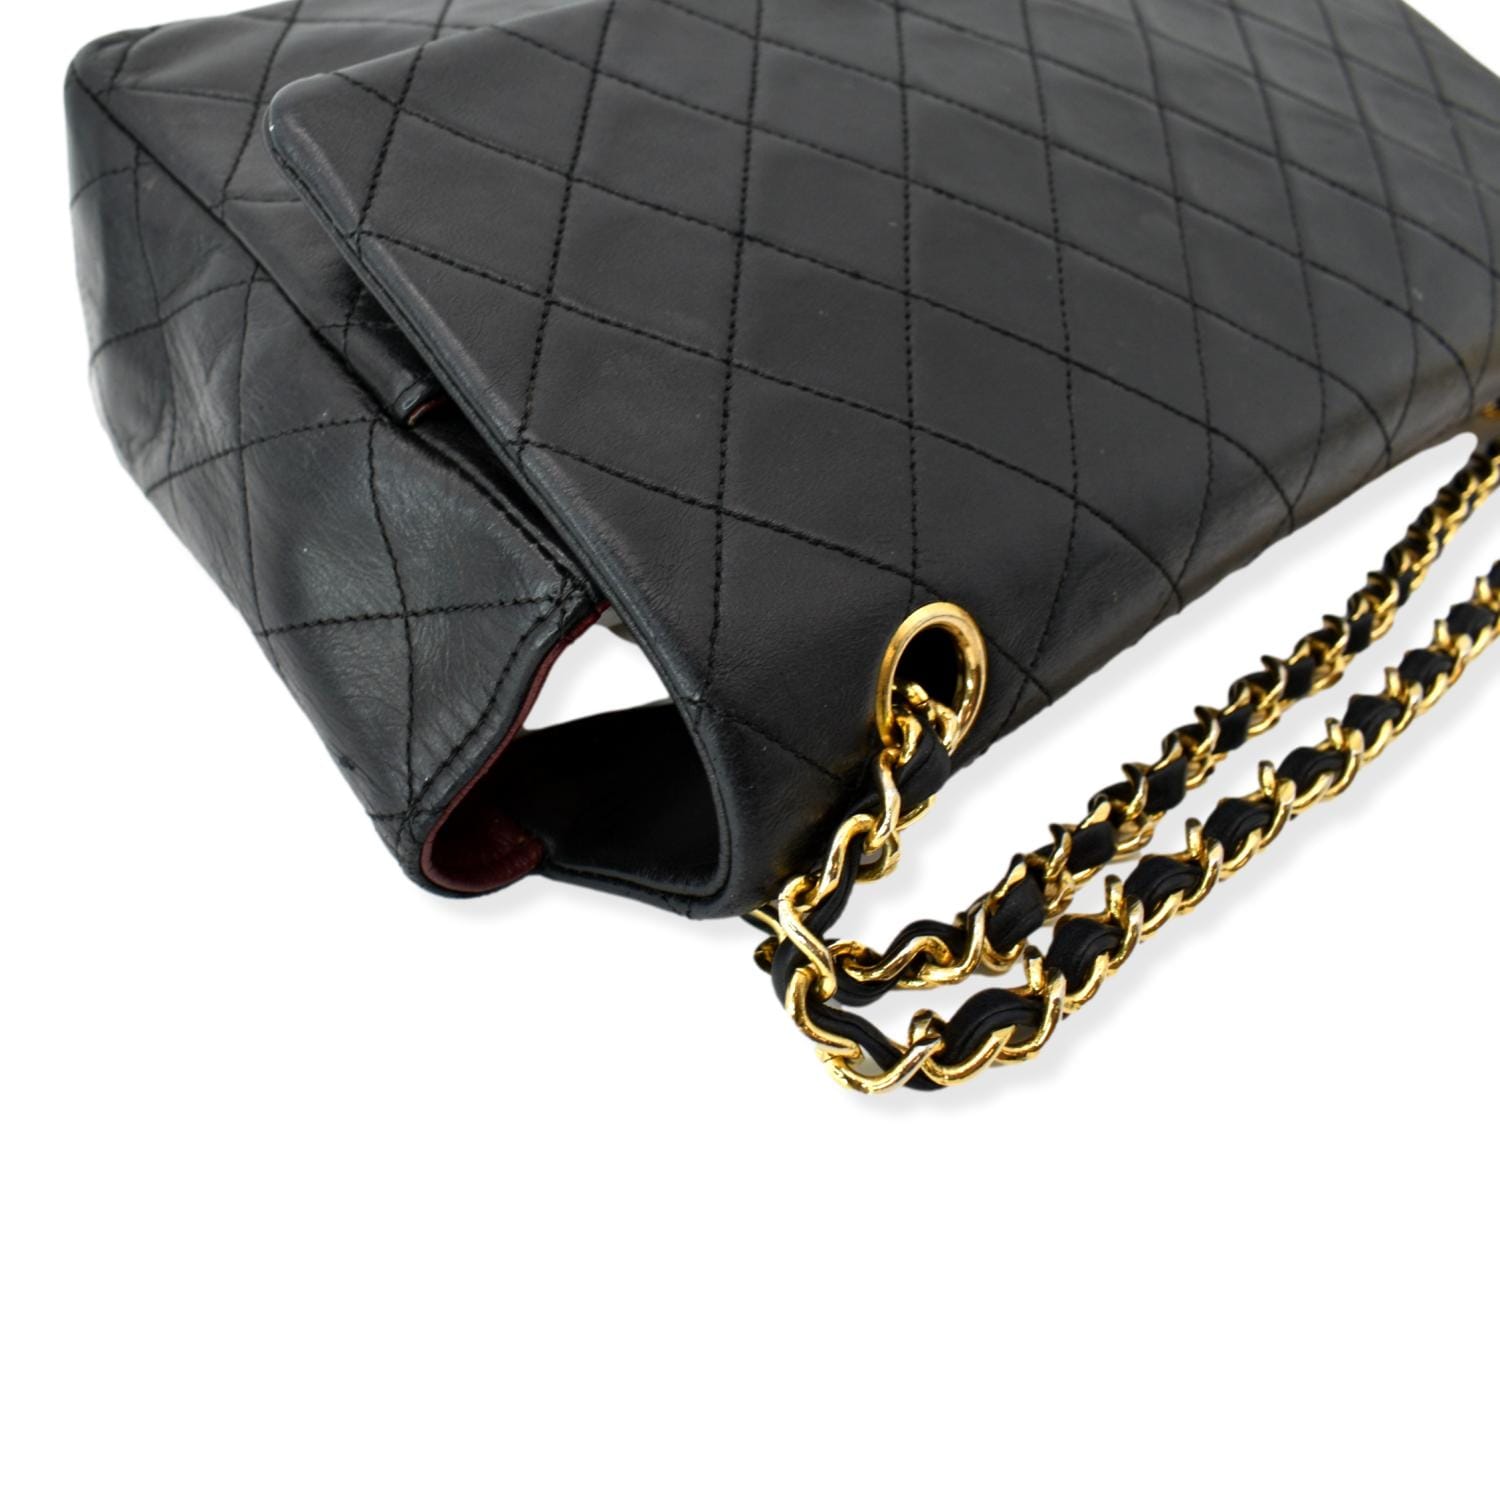 Chanel Classic Vintage Medium Quilted Leather Flap Shoulder Bag